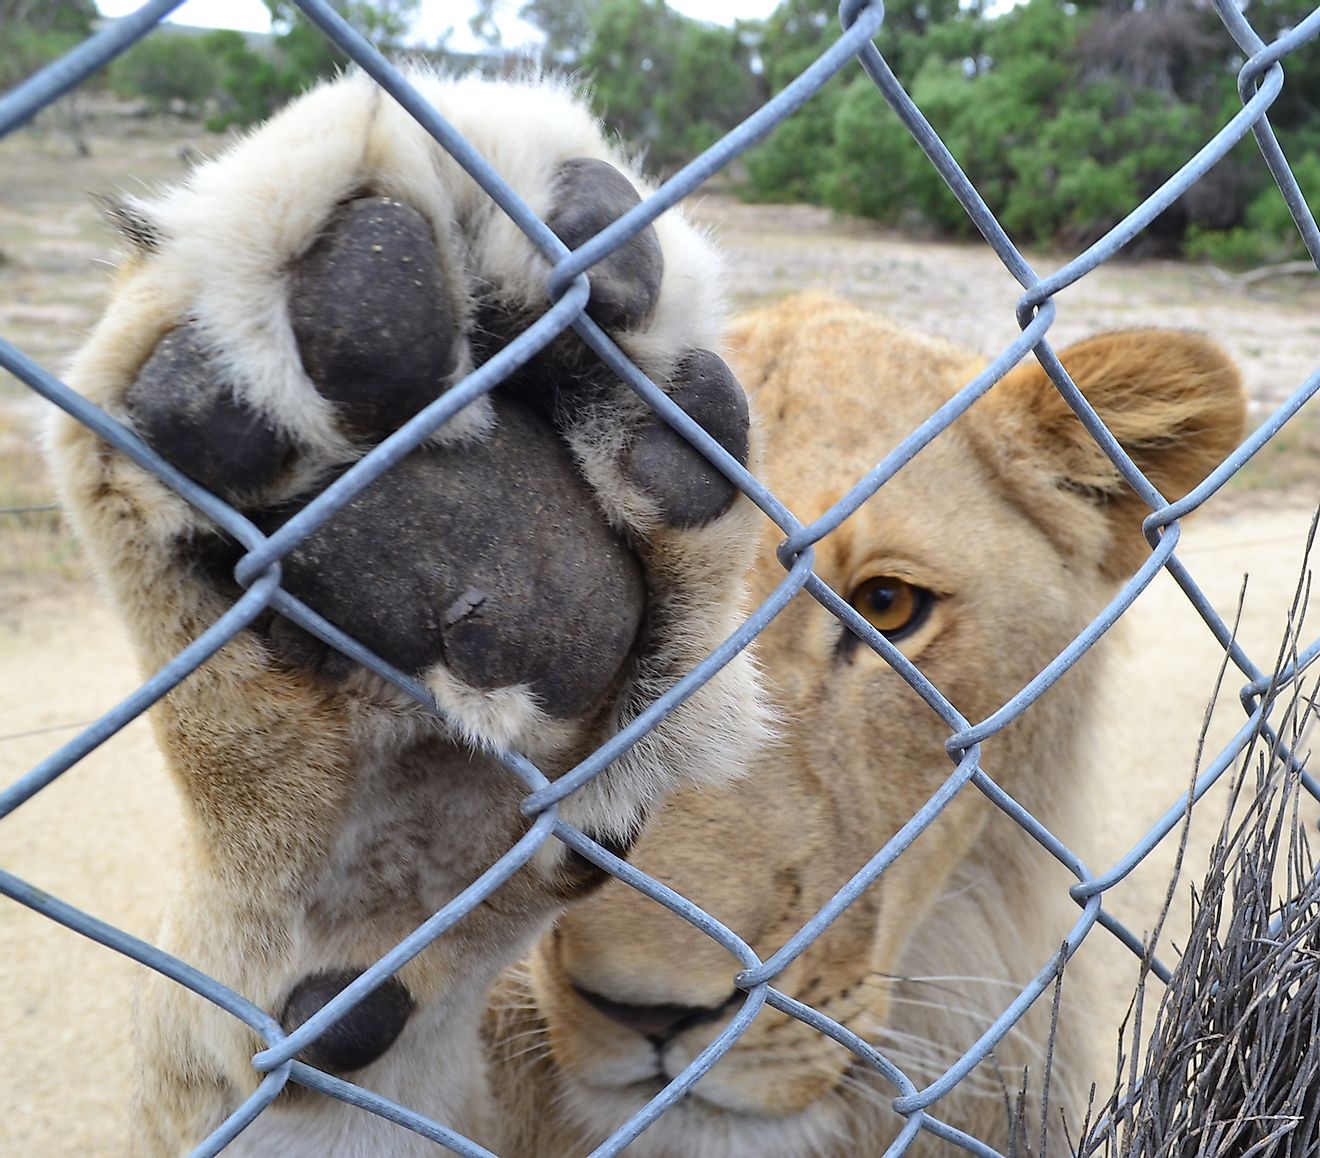 Captive lions suffer a lifetime of exploitation. Image credit: Pieter Oosthuizen/Shutterstock.com